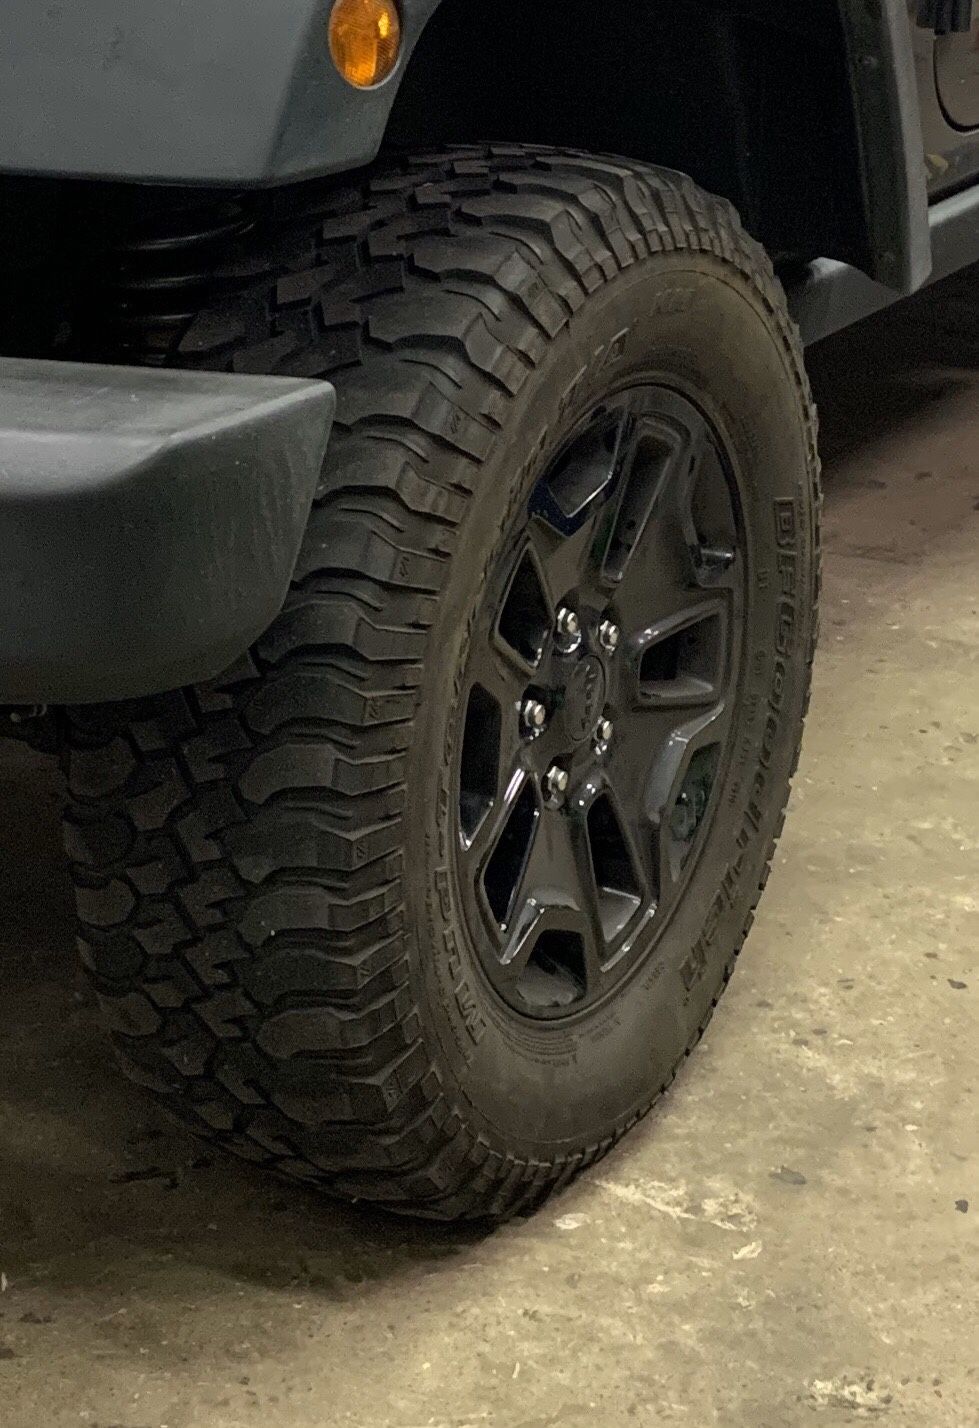 Jeep Wrangler Willy stock black wheels 2013-2018. Five 17’ 9118 black gloss.